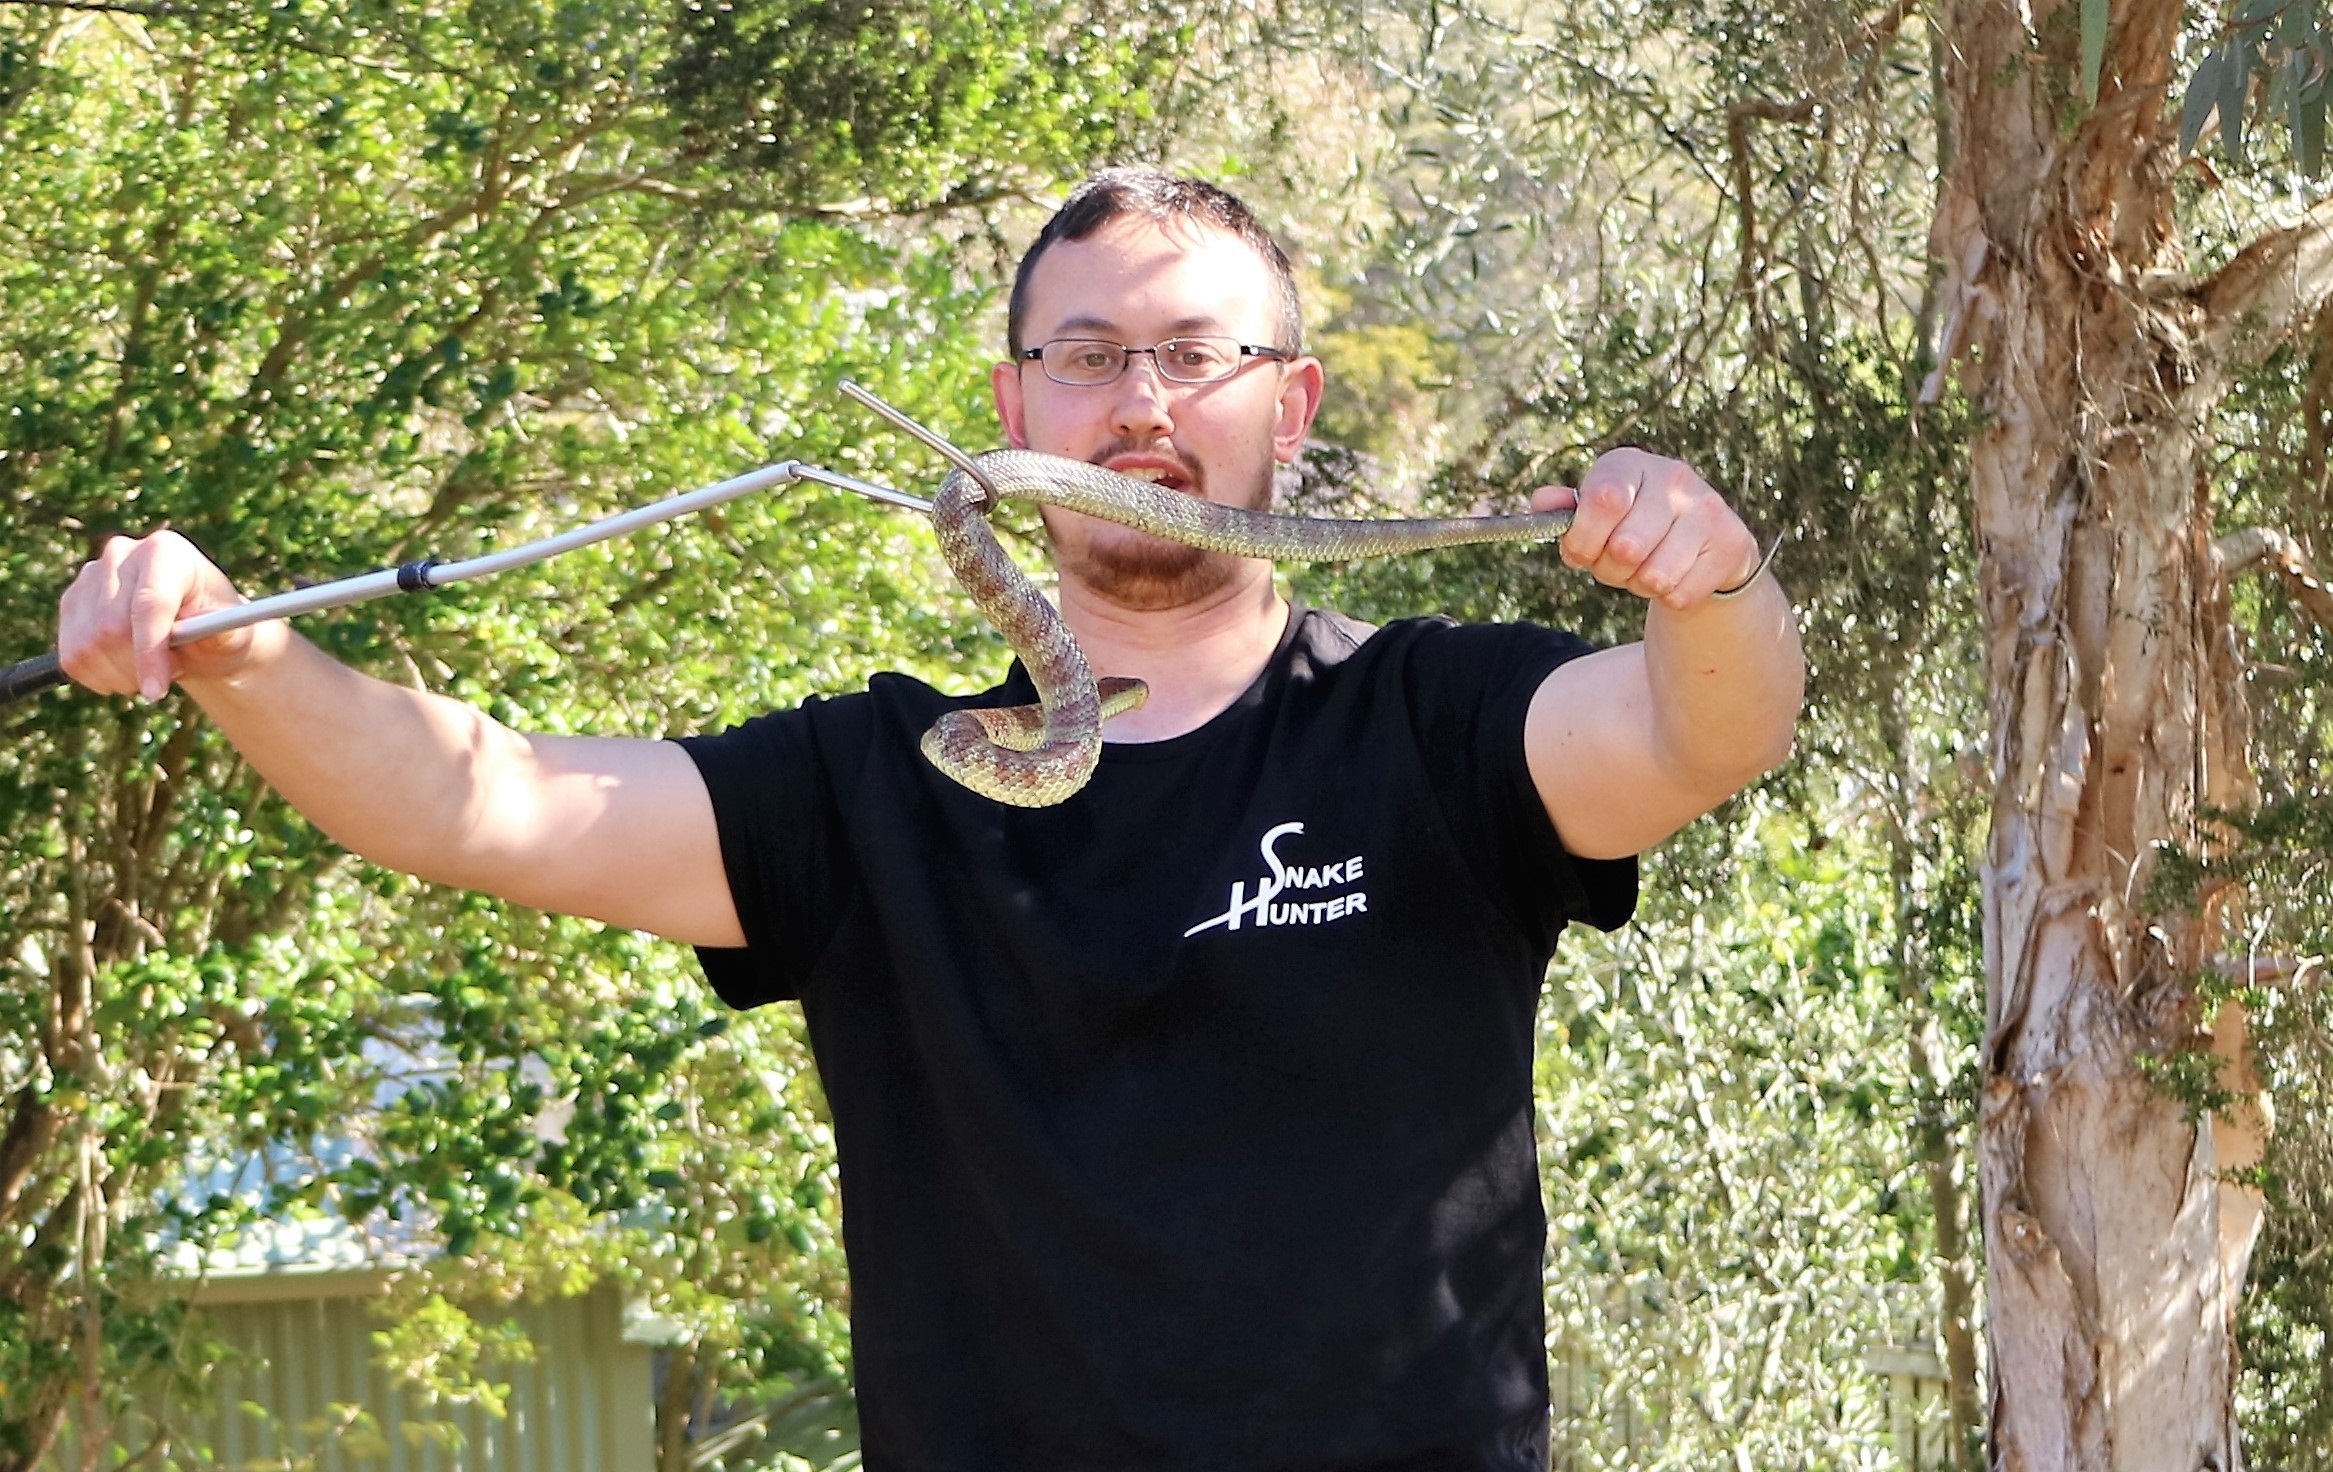 Diamond Creek Snake Catcher